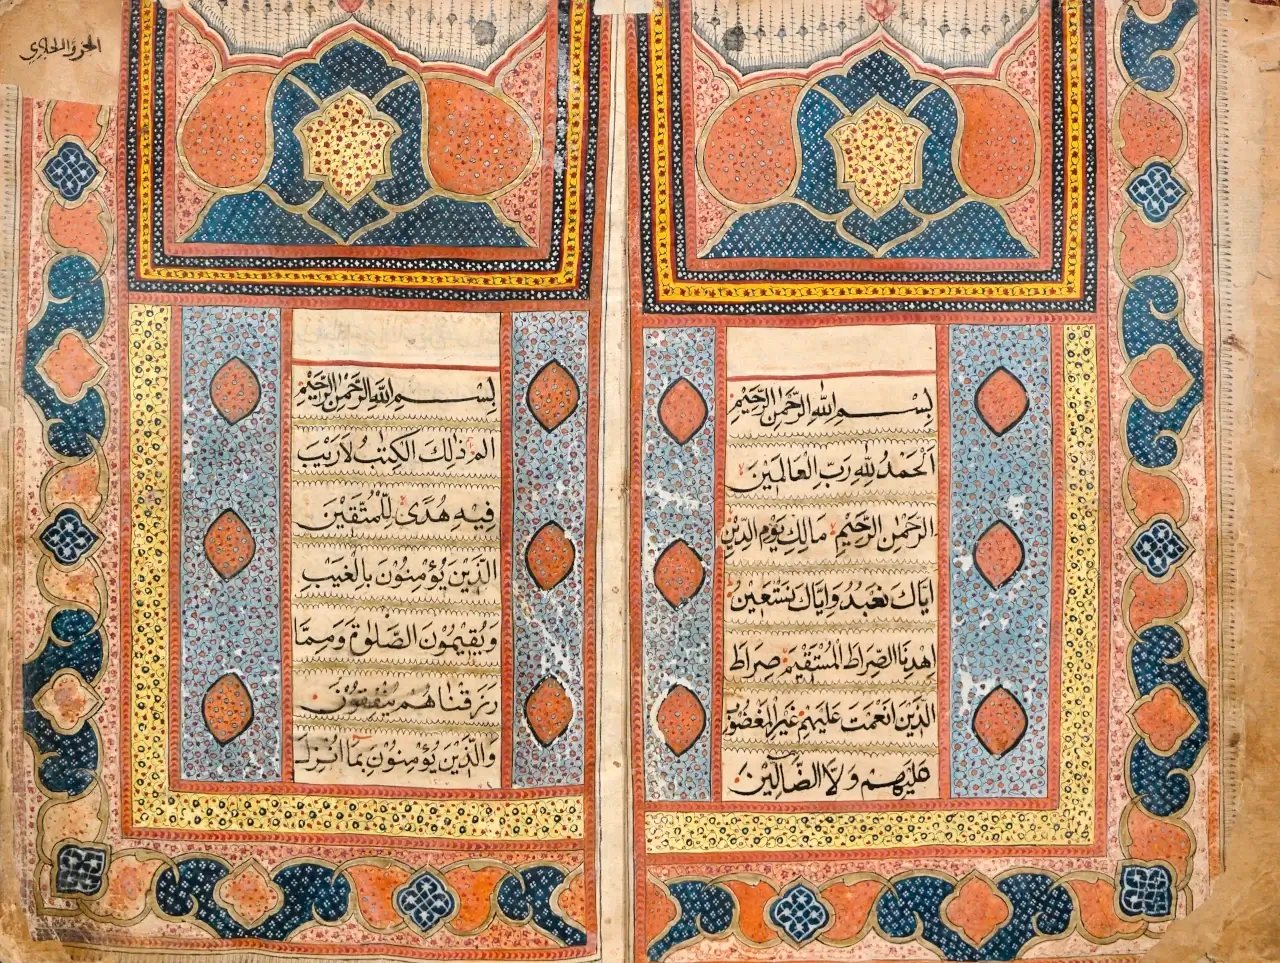 Islamic Art in Oman - Calligraphy as an Example